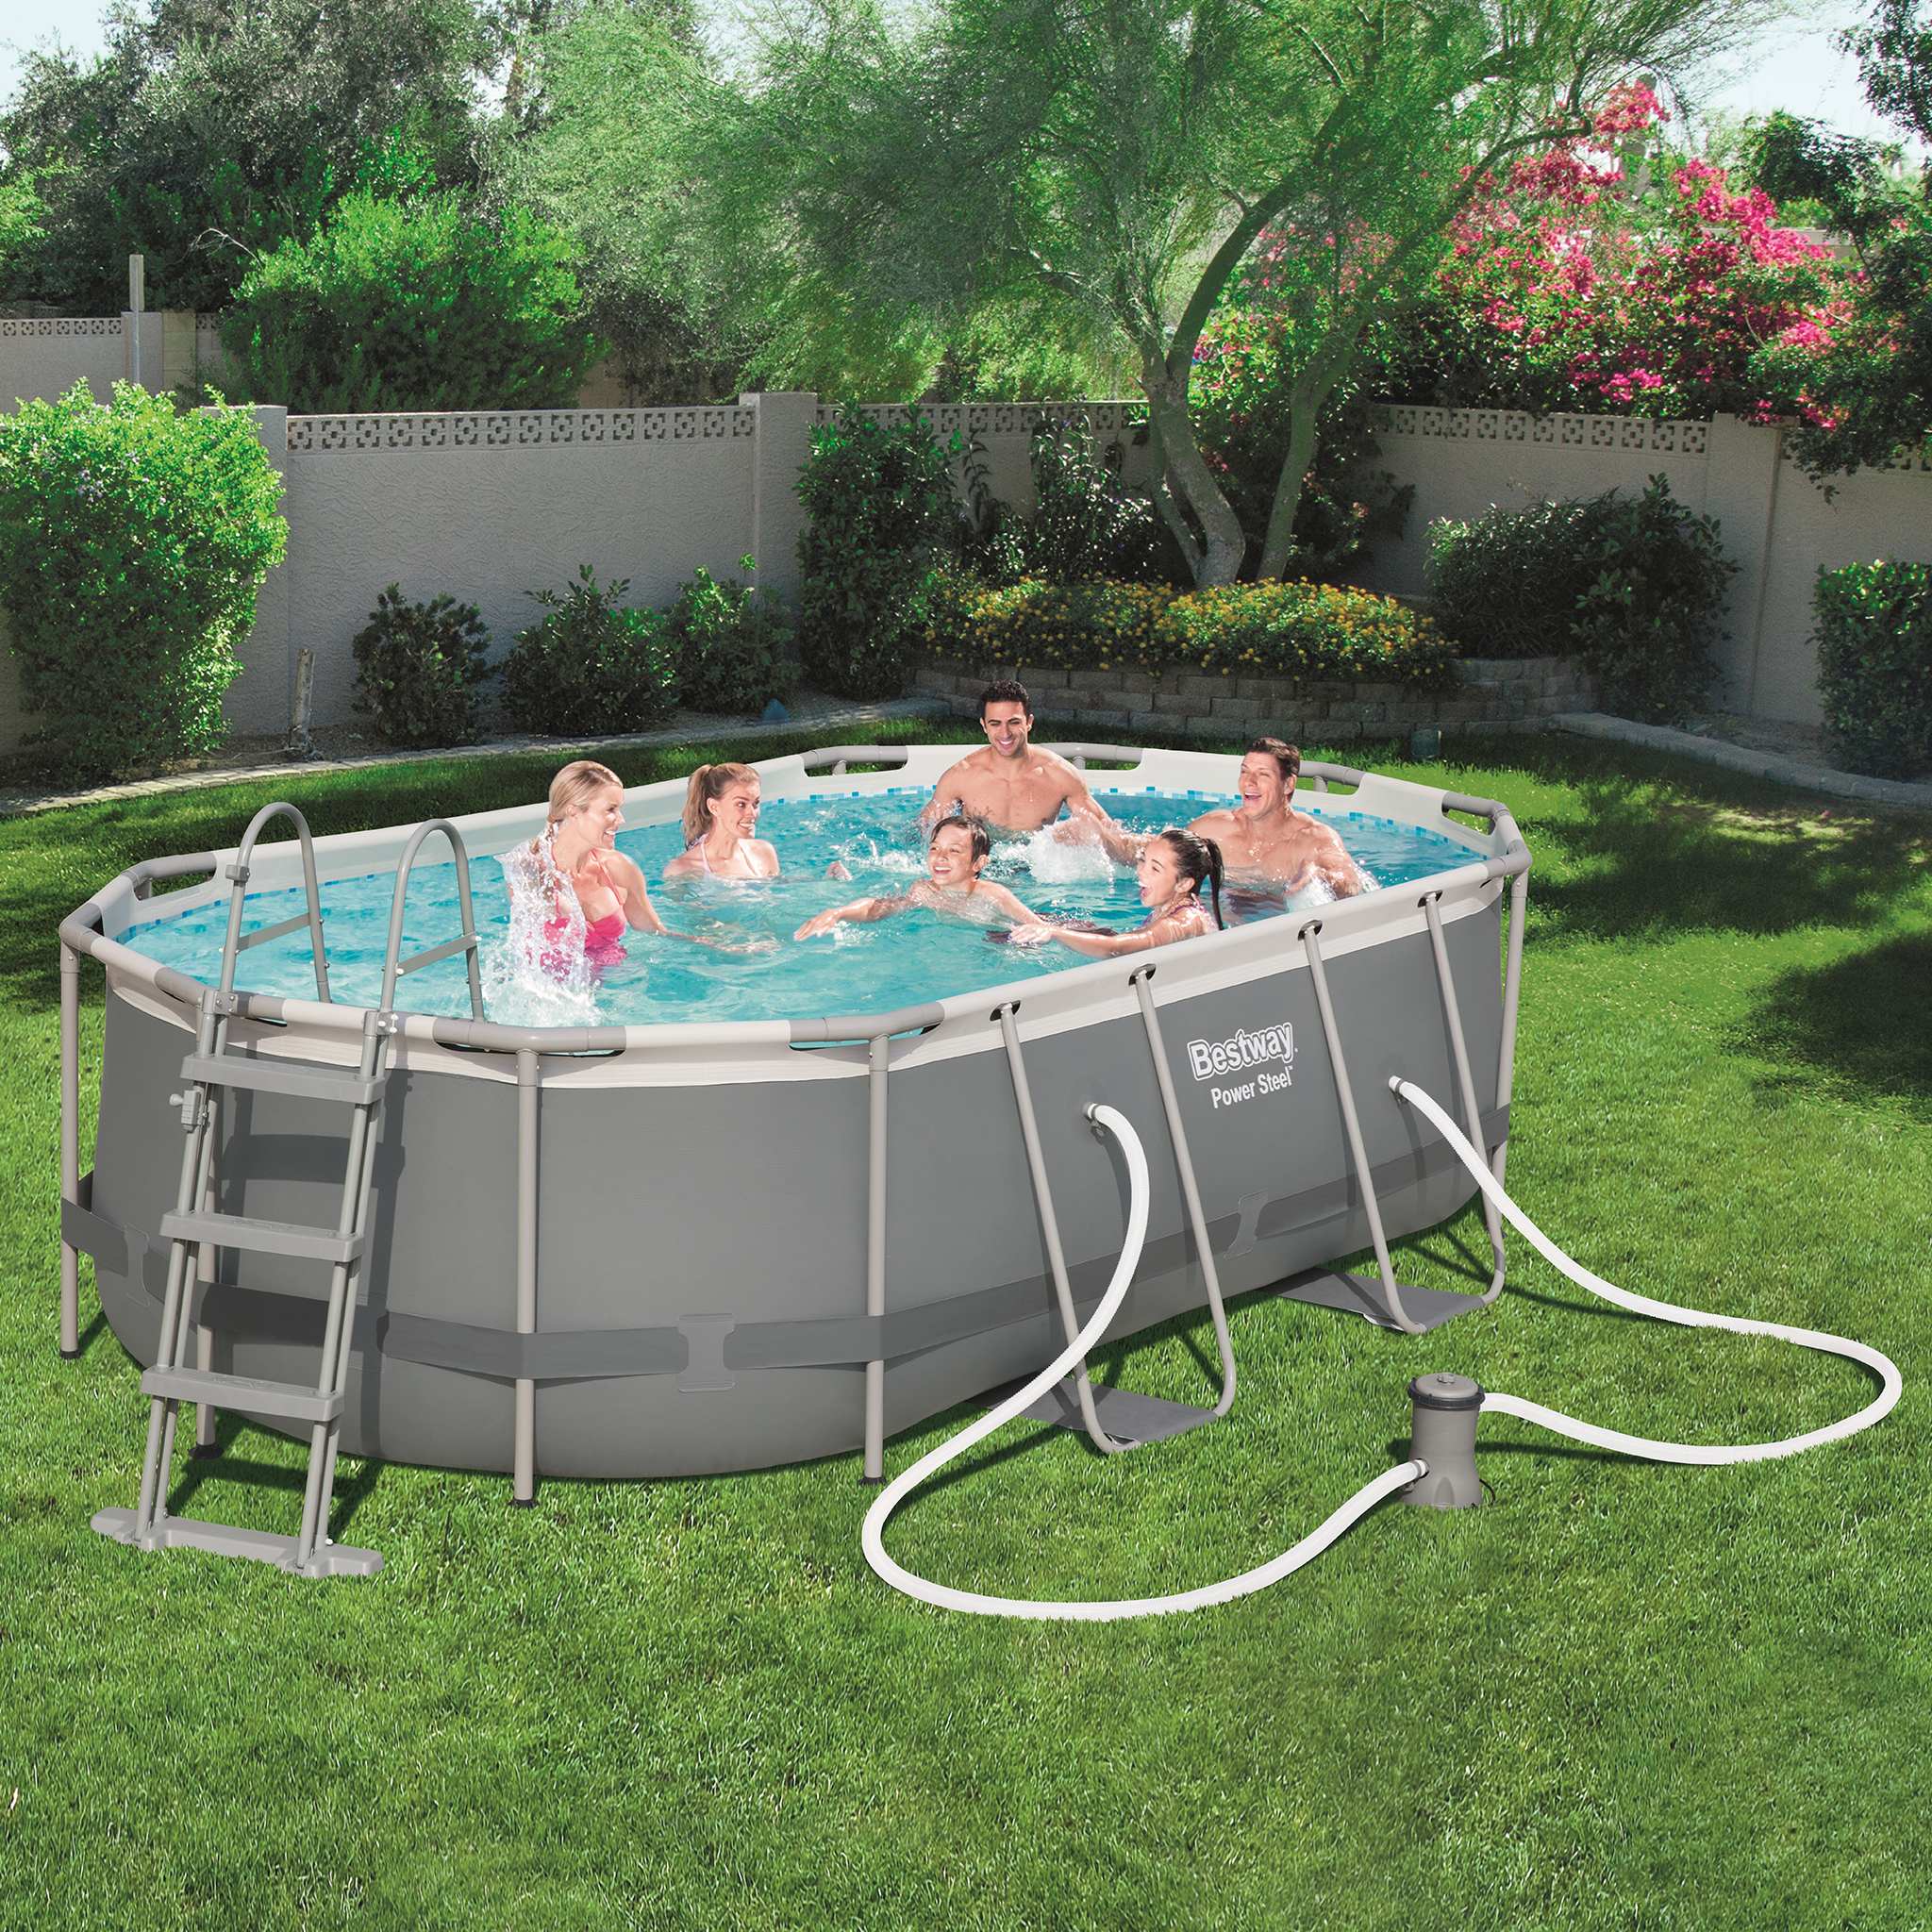 Produktfoto för Bestway pool ovan mark 4,3x2,5m - 1m djup | Power Steel Oval (56620)